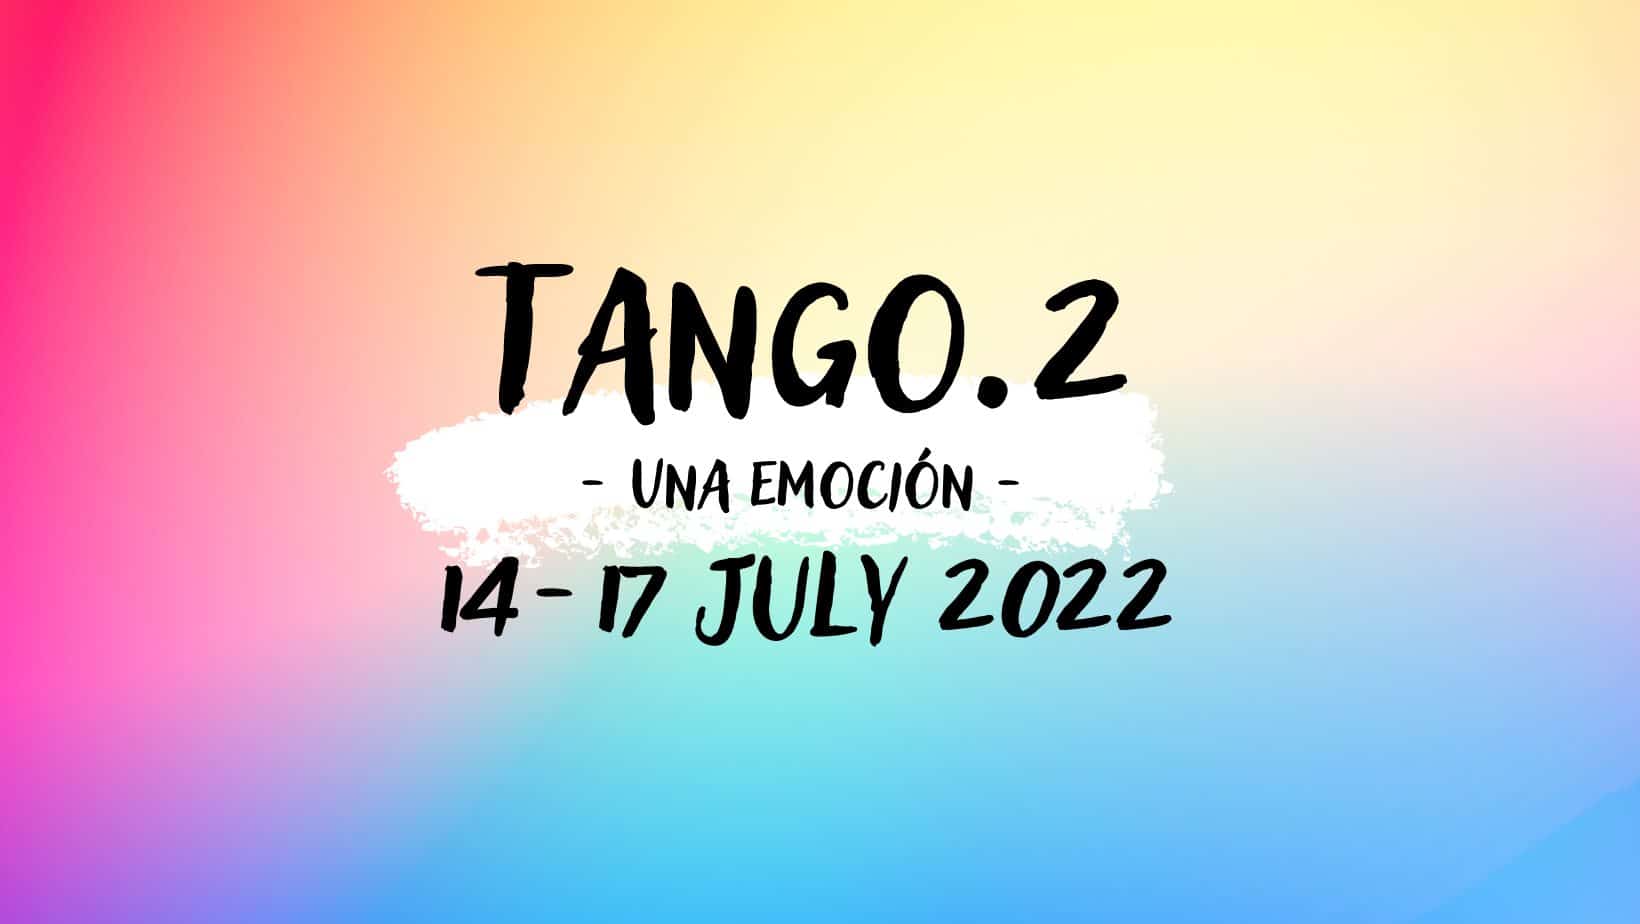 Tango.2 Tango Festival 2022 – Una emoción Preview Image